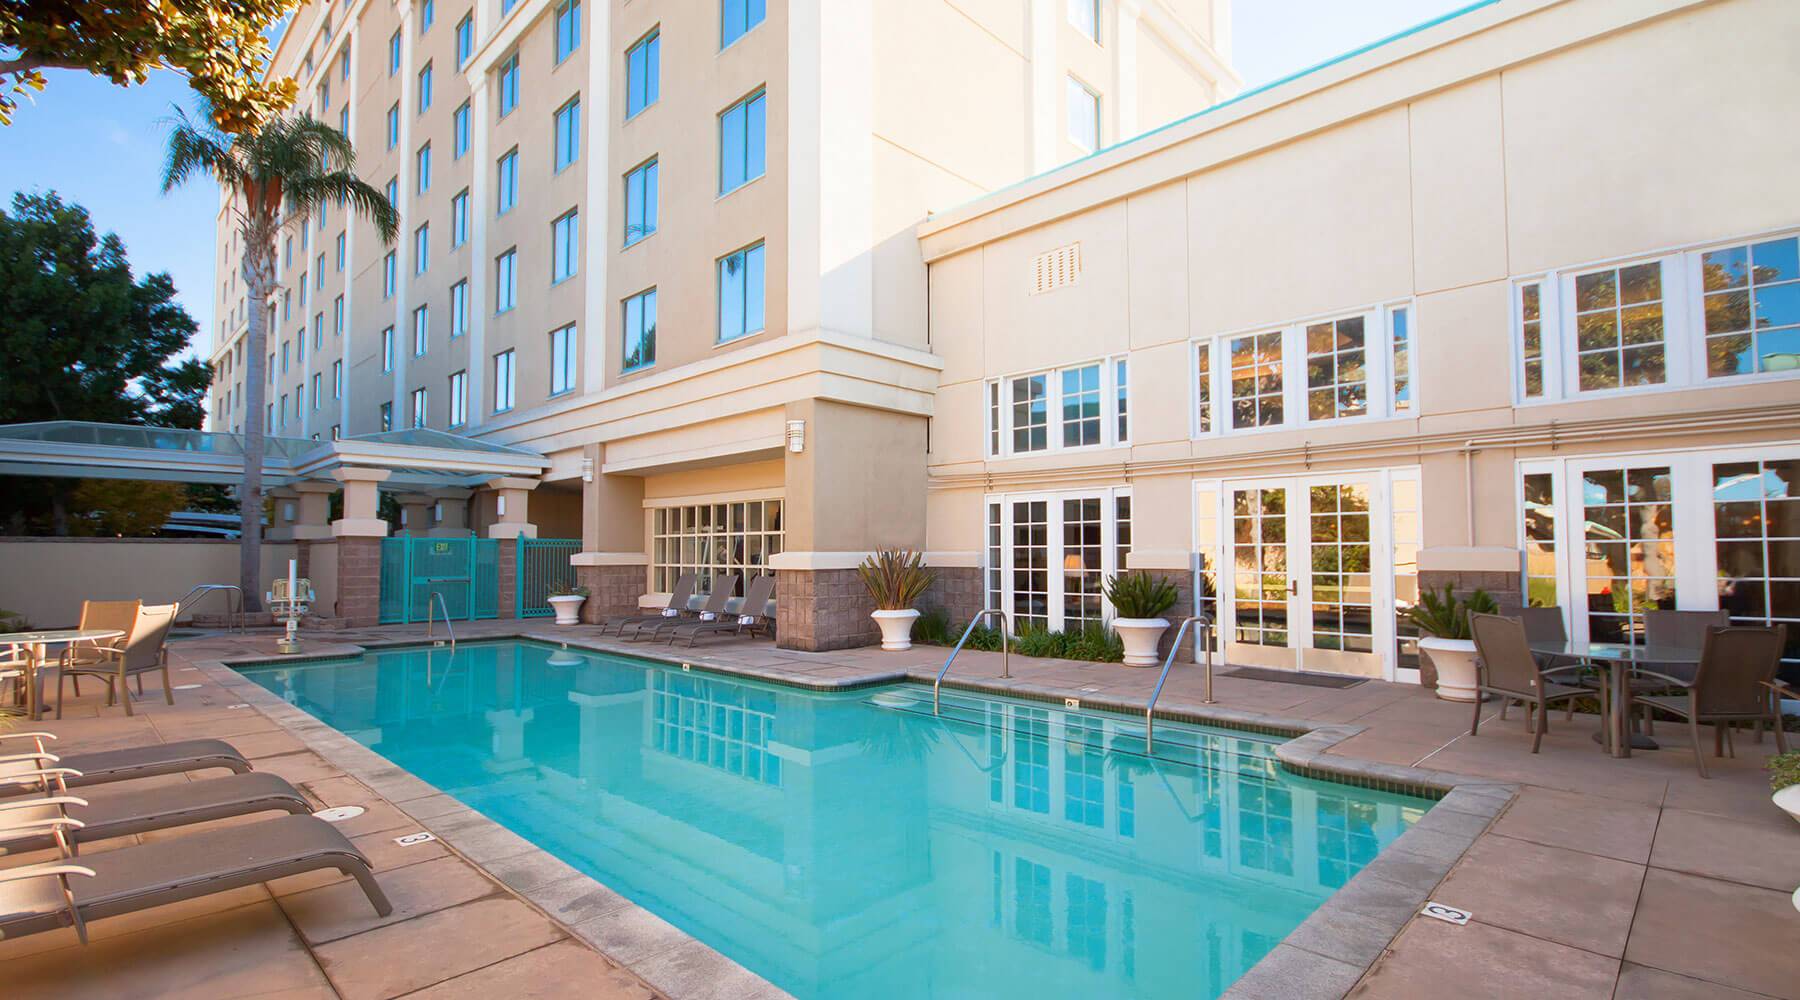 Santa Clara Biltmore Hotel & Suites - Outdoor Swimming Pool In Private Location